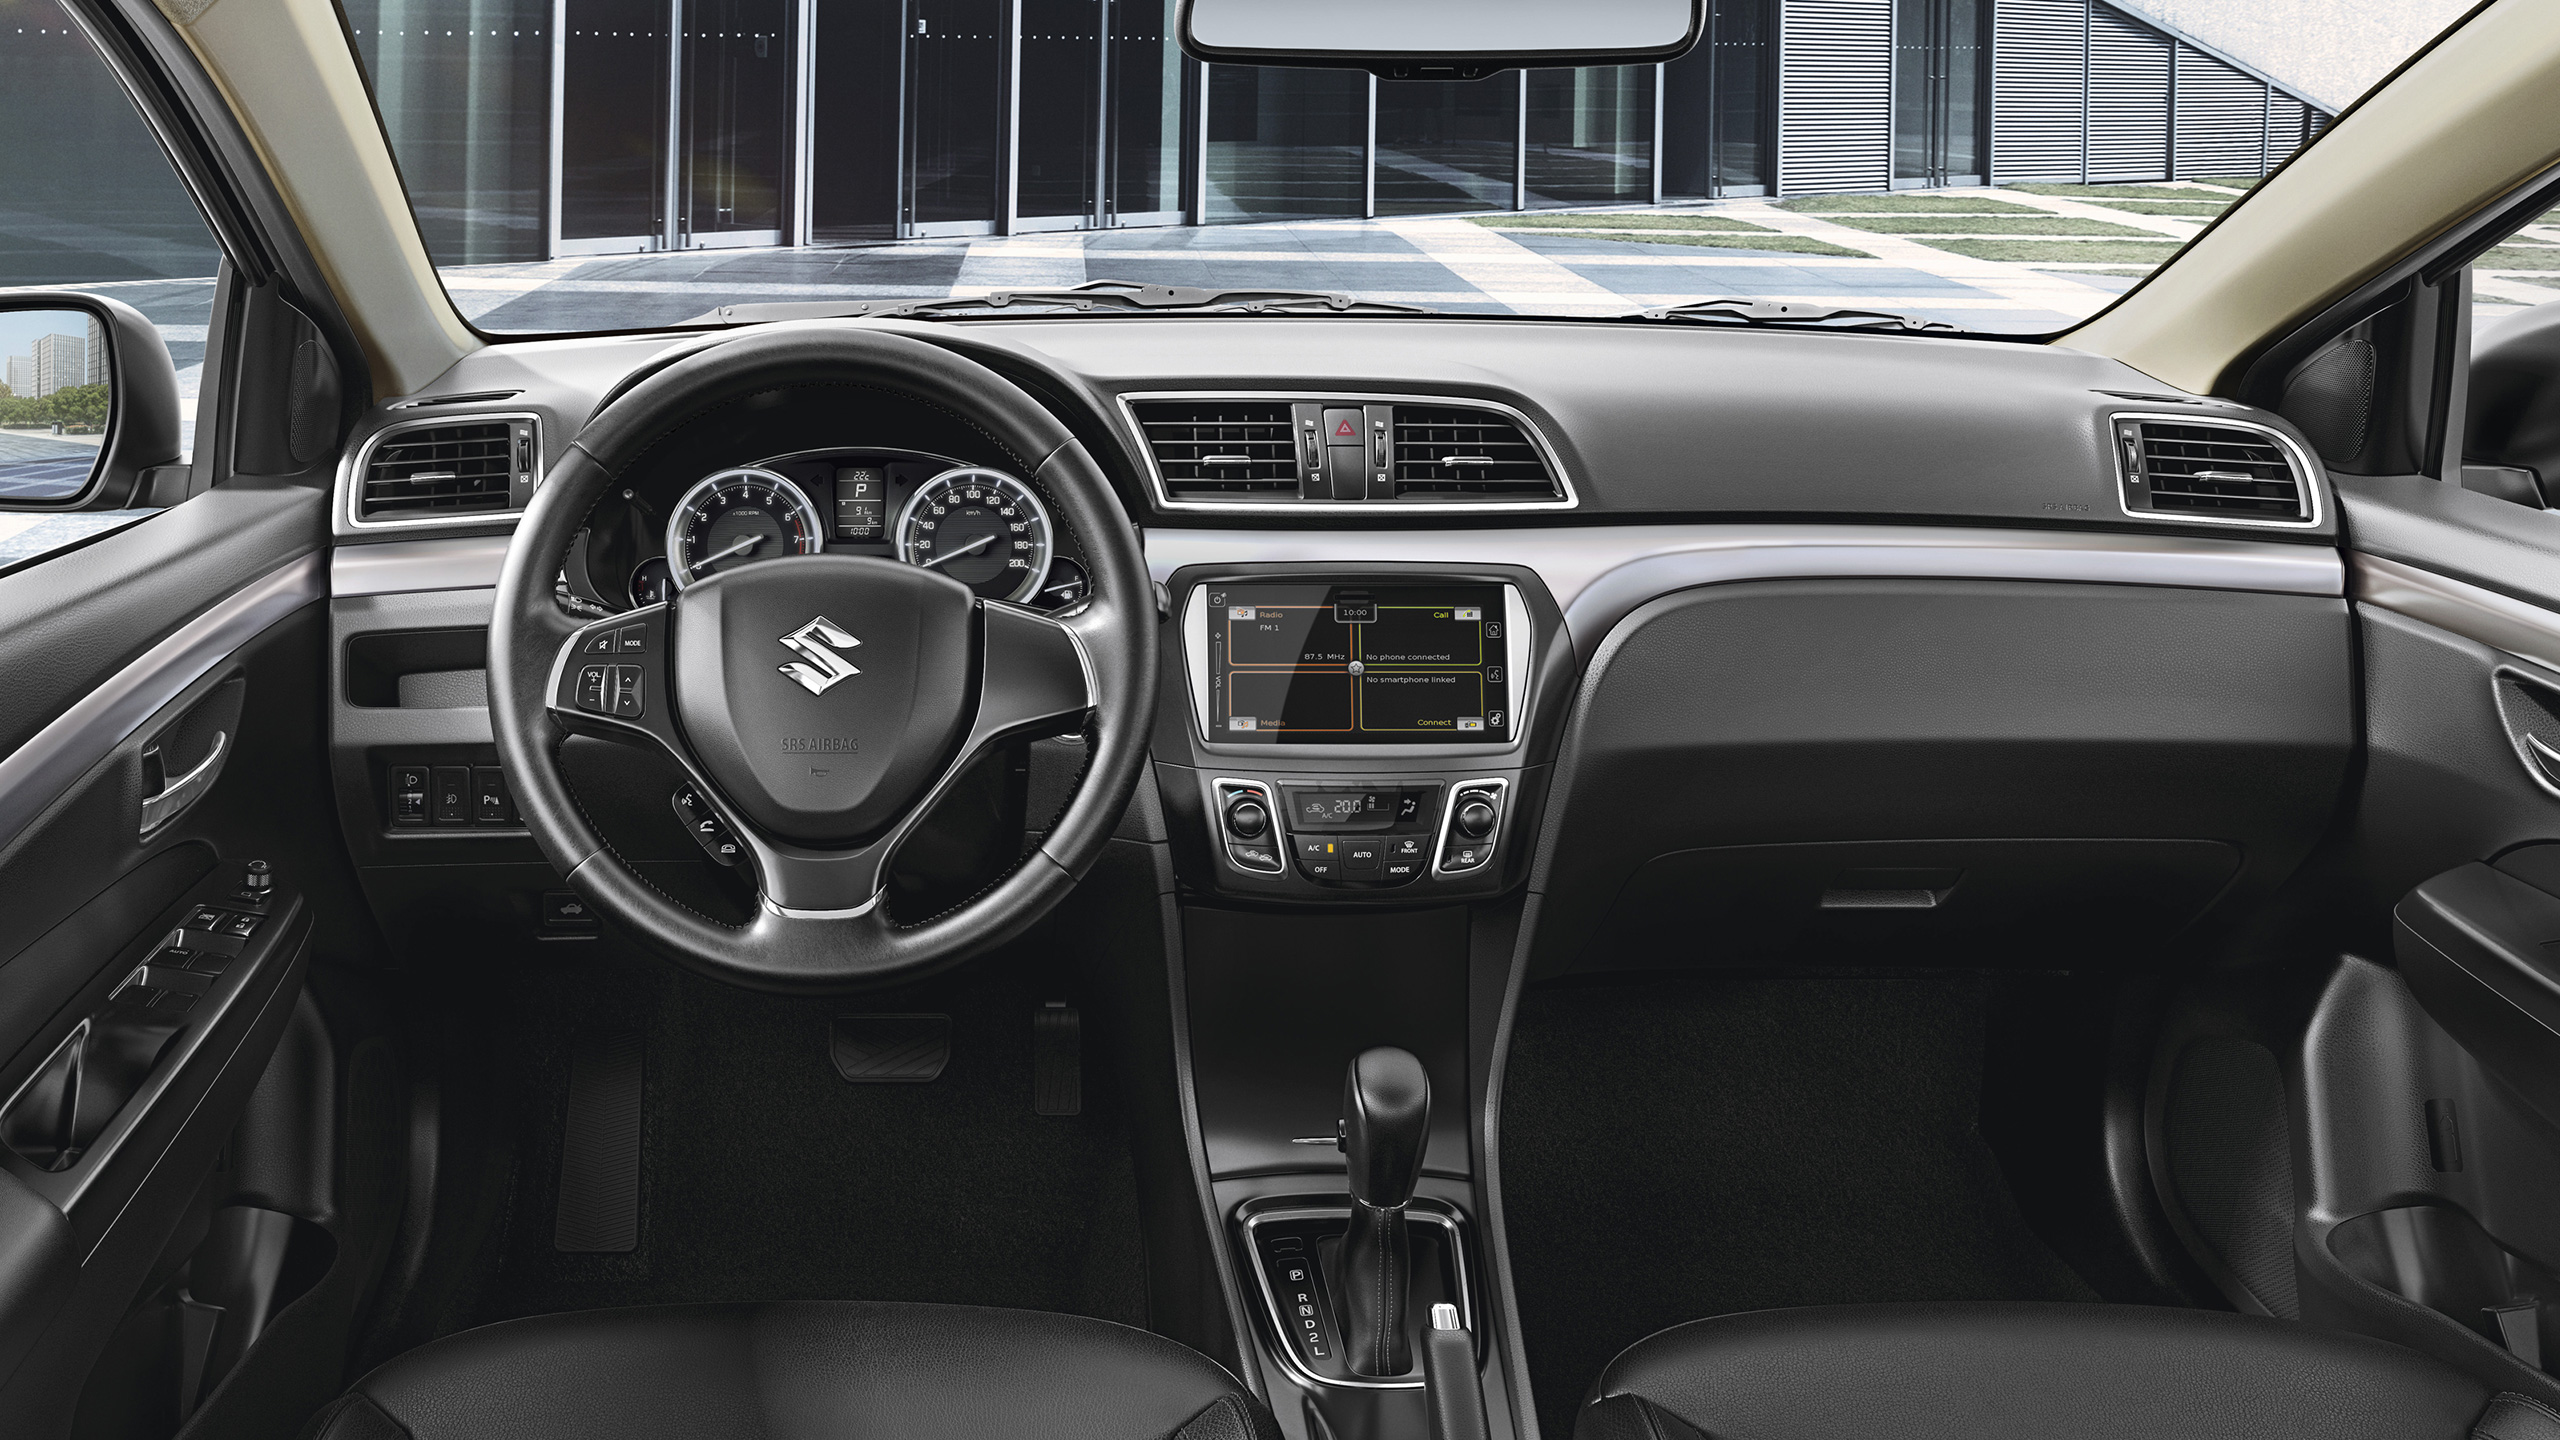 Maruti Suzuki Ciaz Facelift Cabin Revealed In New Spy Shots